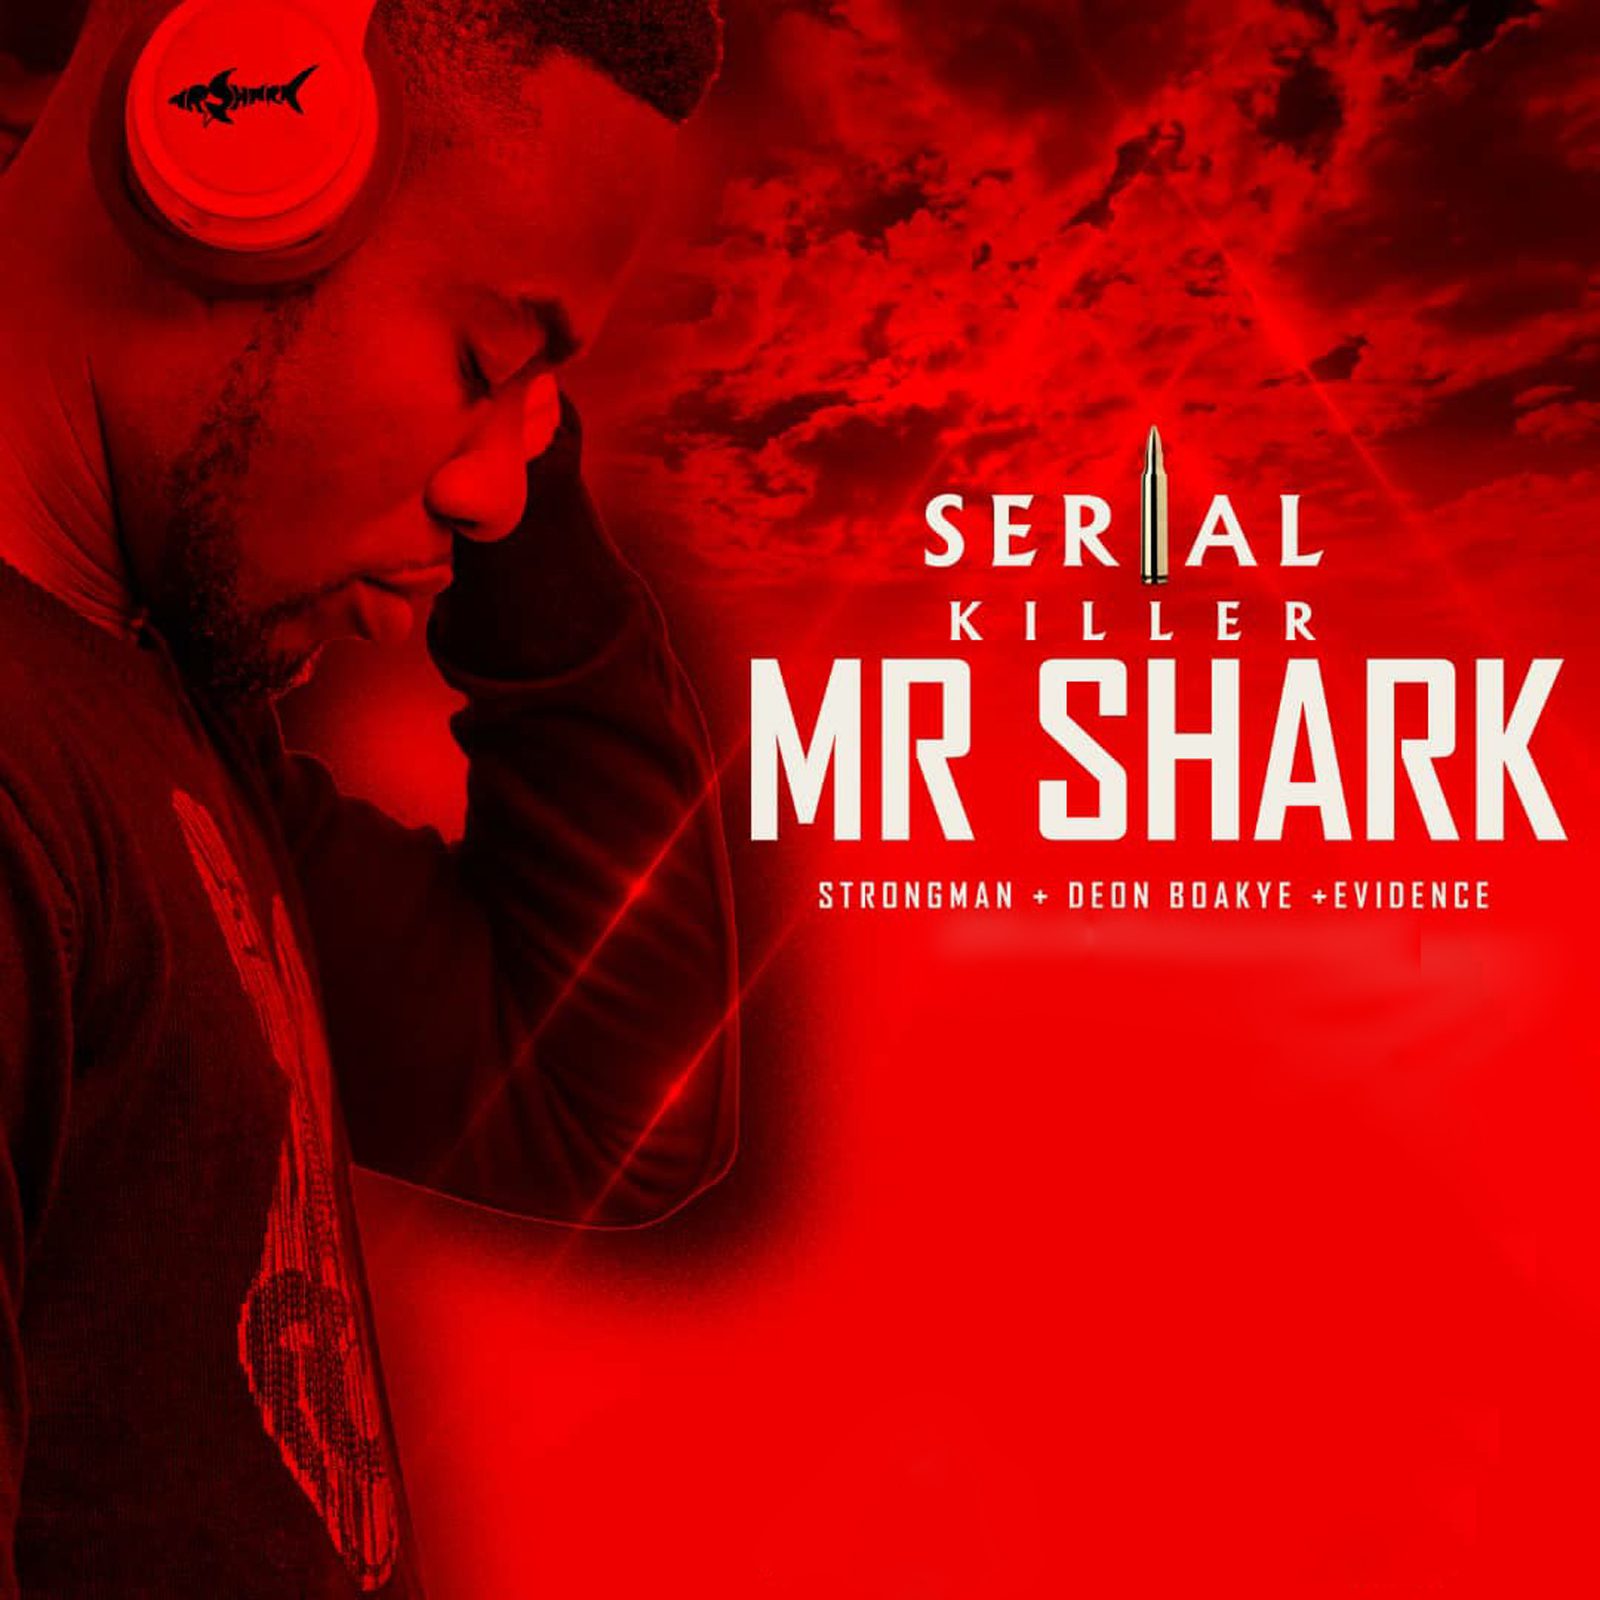 Mr Shark Features Strongman, Deon Boakye & Evidence On New Single, “Serial killer”.